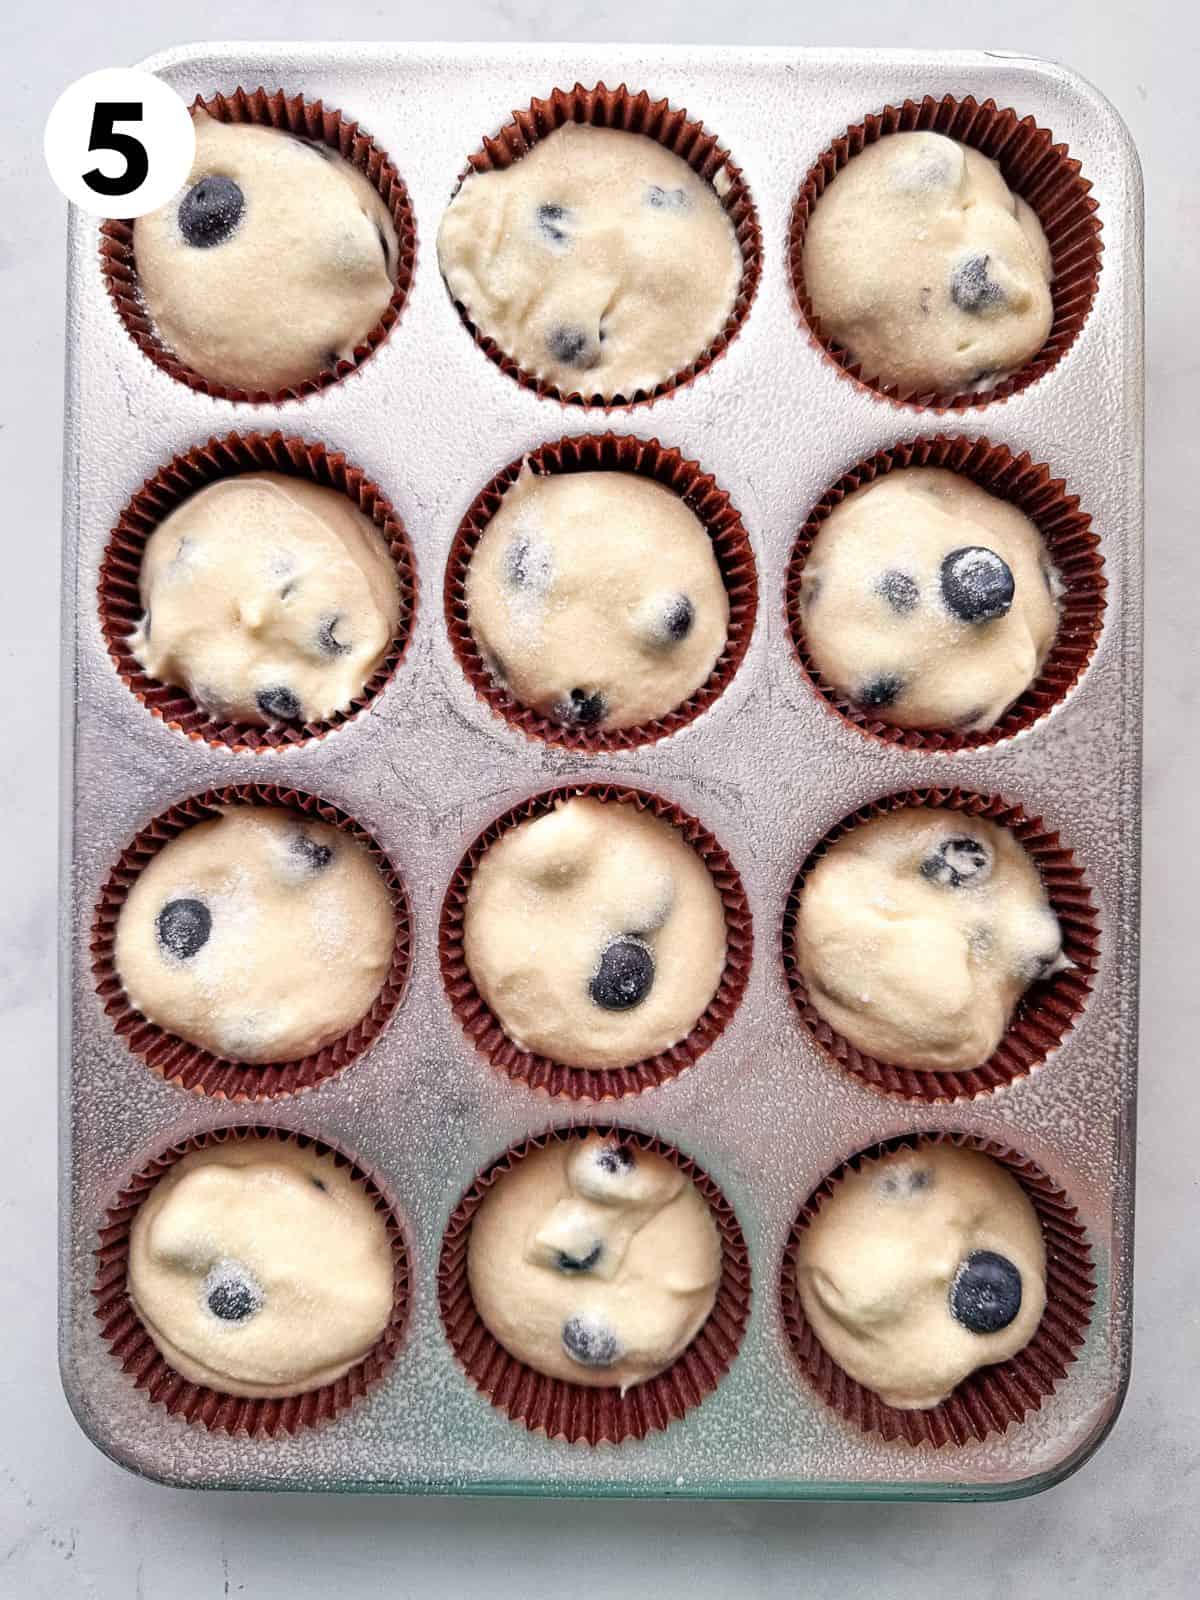 Gluten free blueberry muffin batter in a pan.